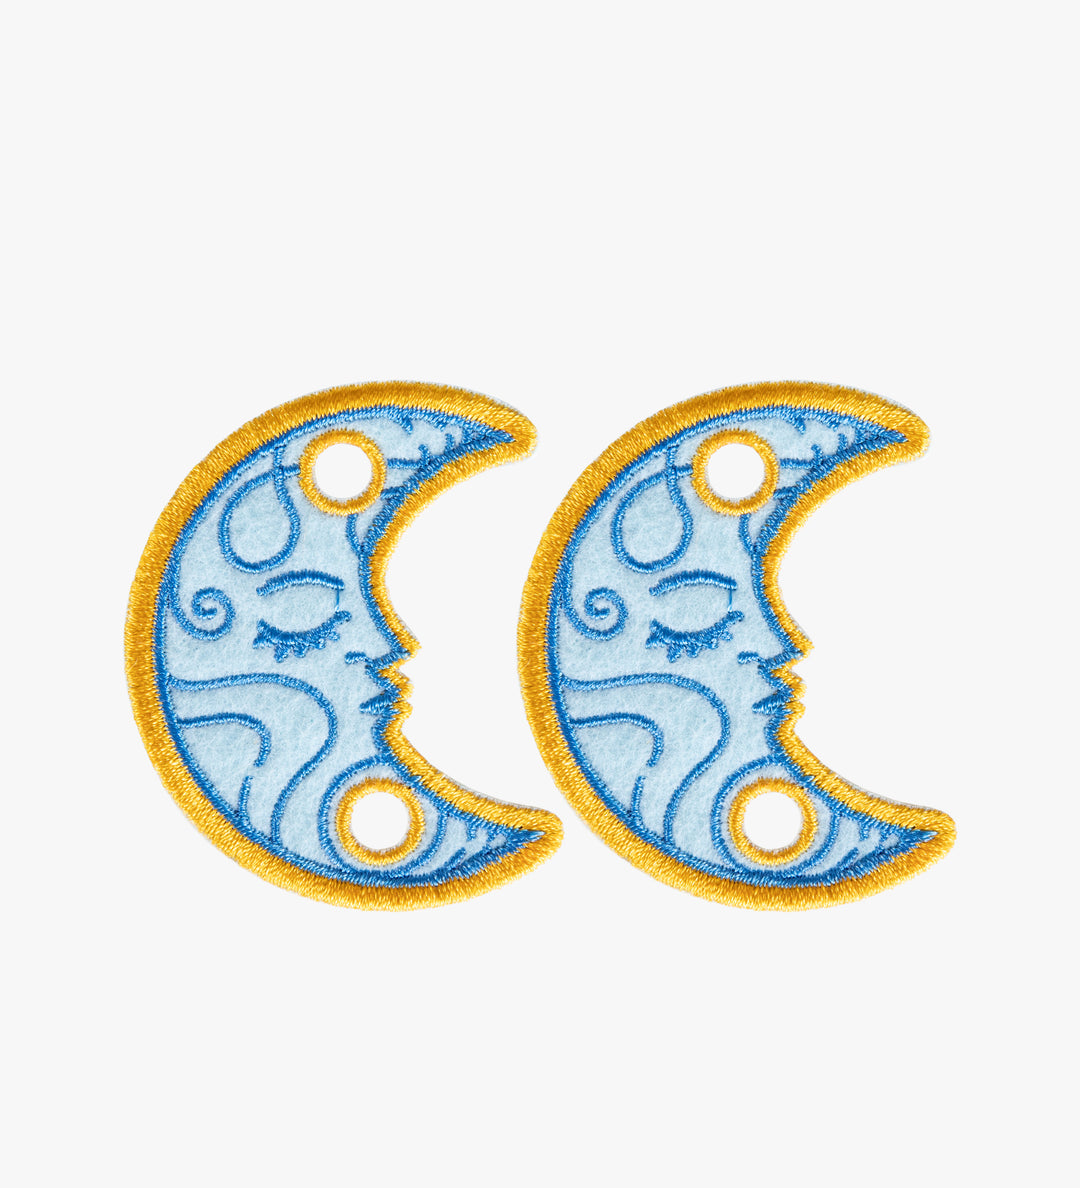 C7skates Celestial Moon Roller Skate Lace Charm Set of 2 in Heavenly Blue 